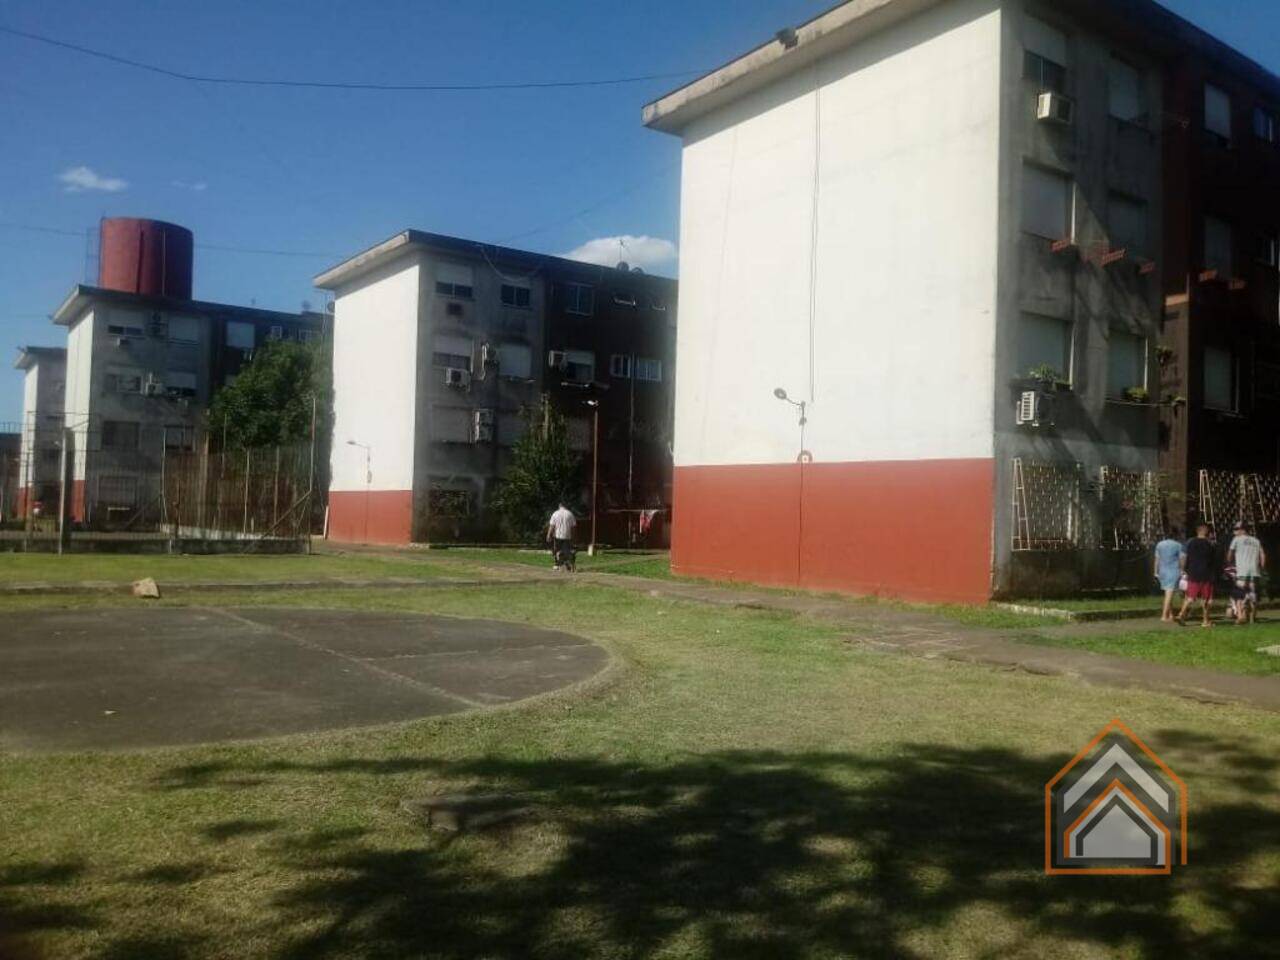 Apartamento Rubem Berta, Porto Alegre - RS